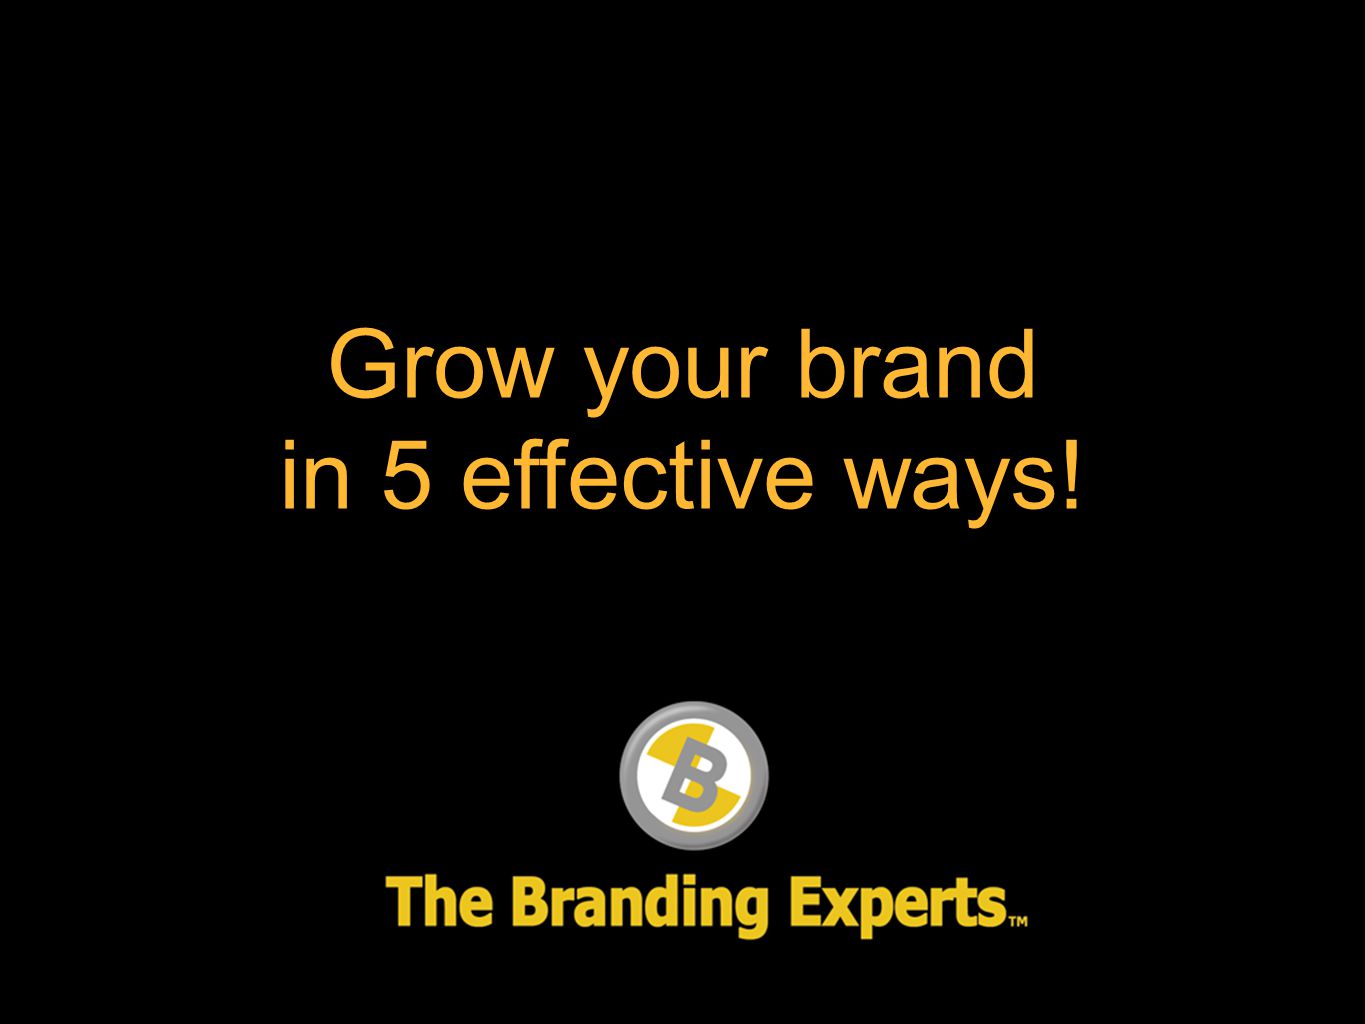 Grow your brand in 5 effective ways!